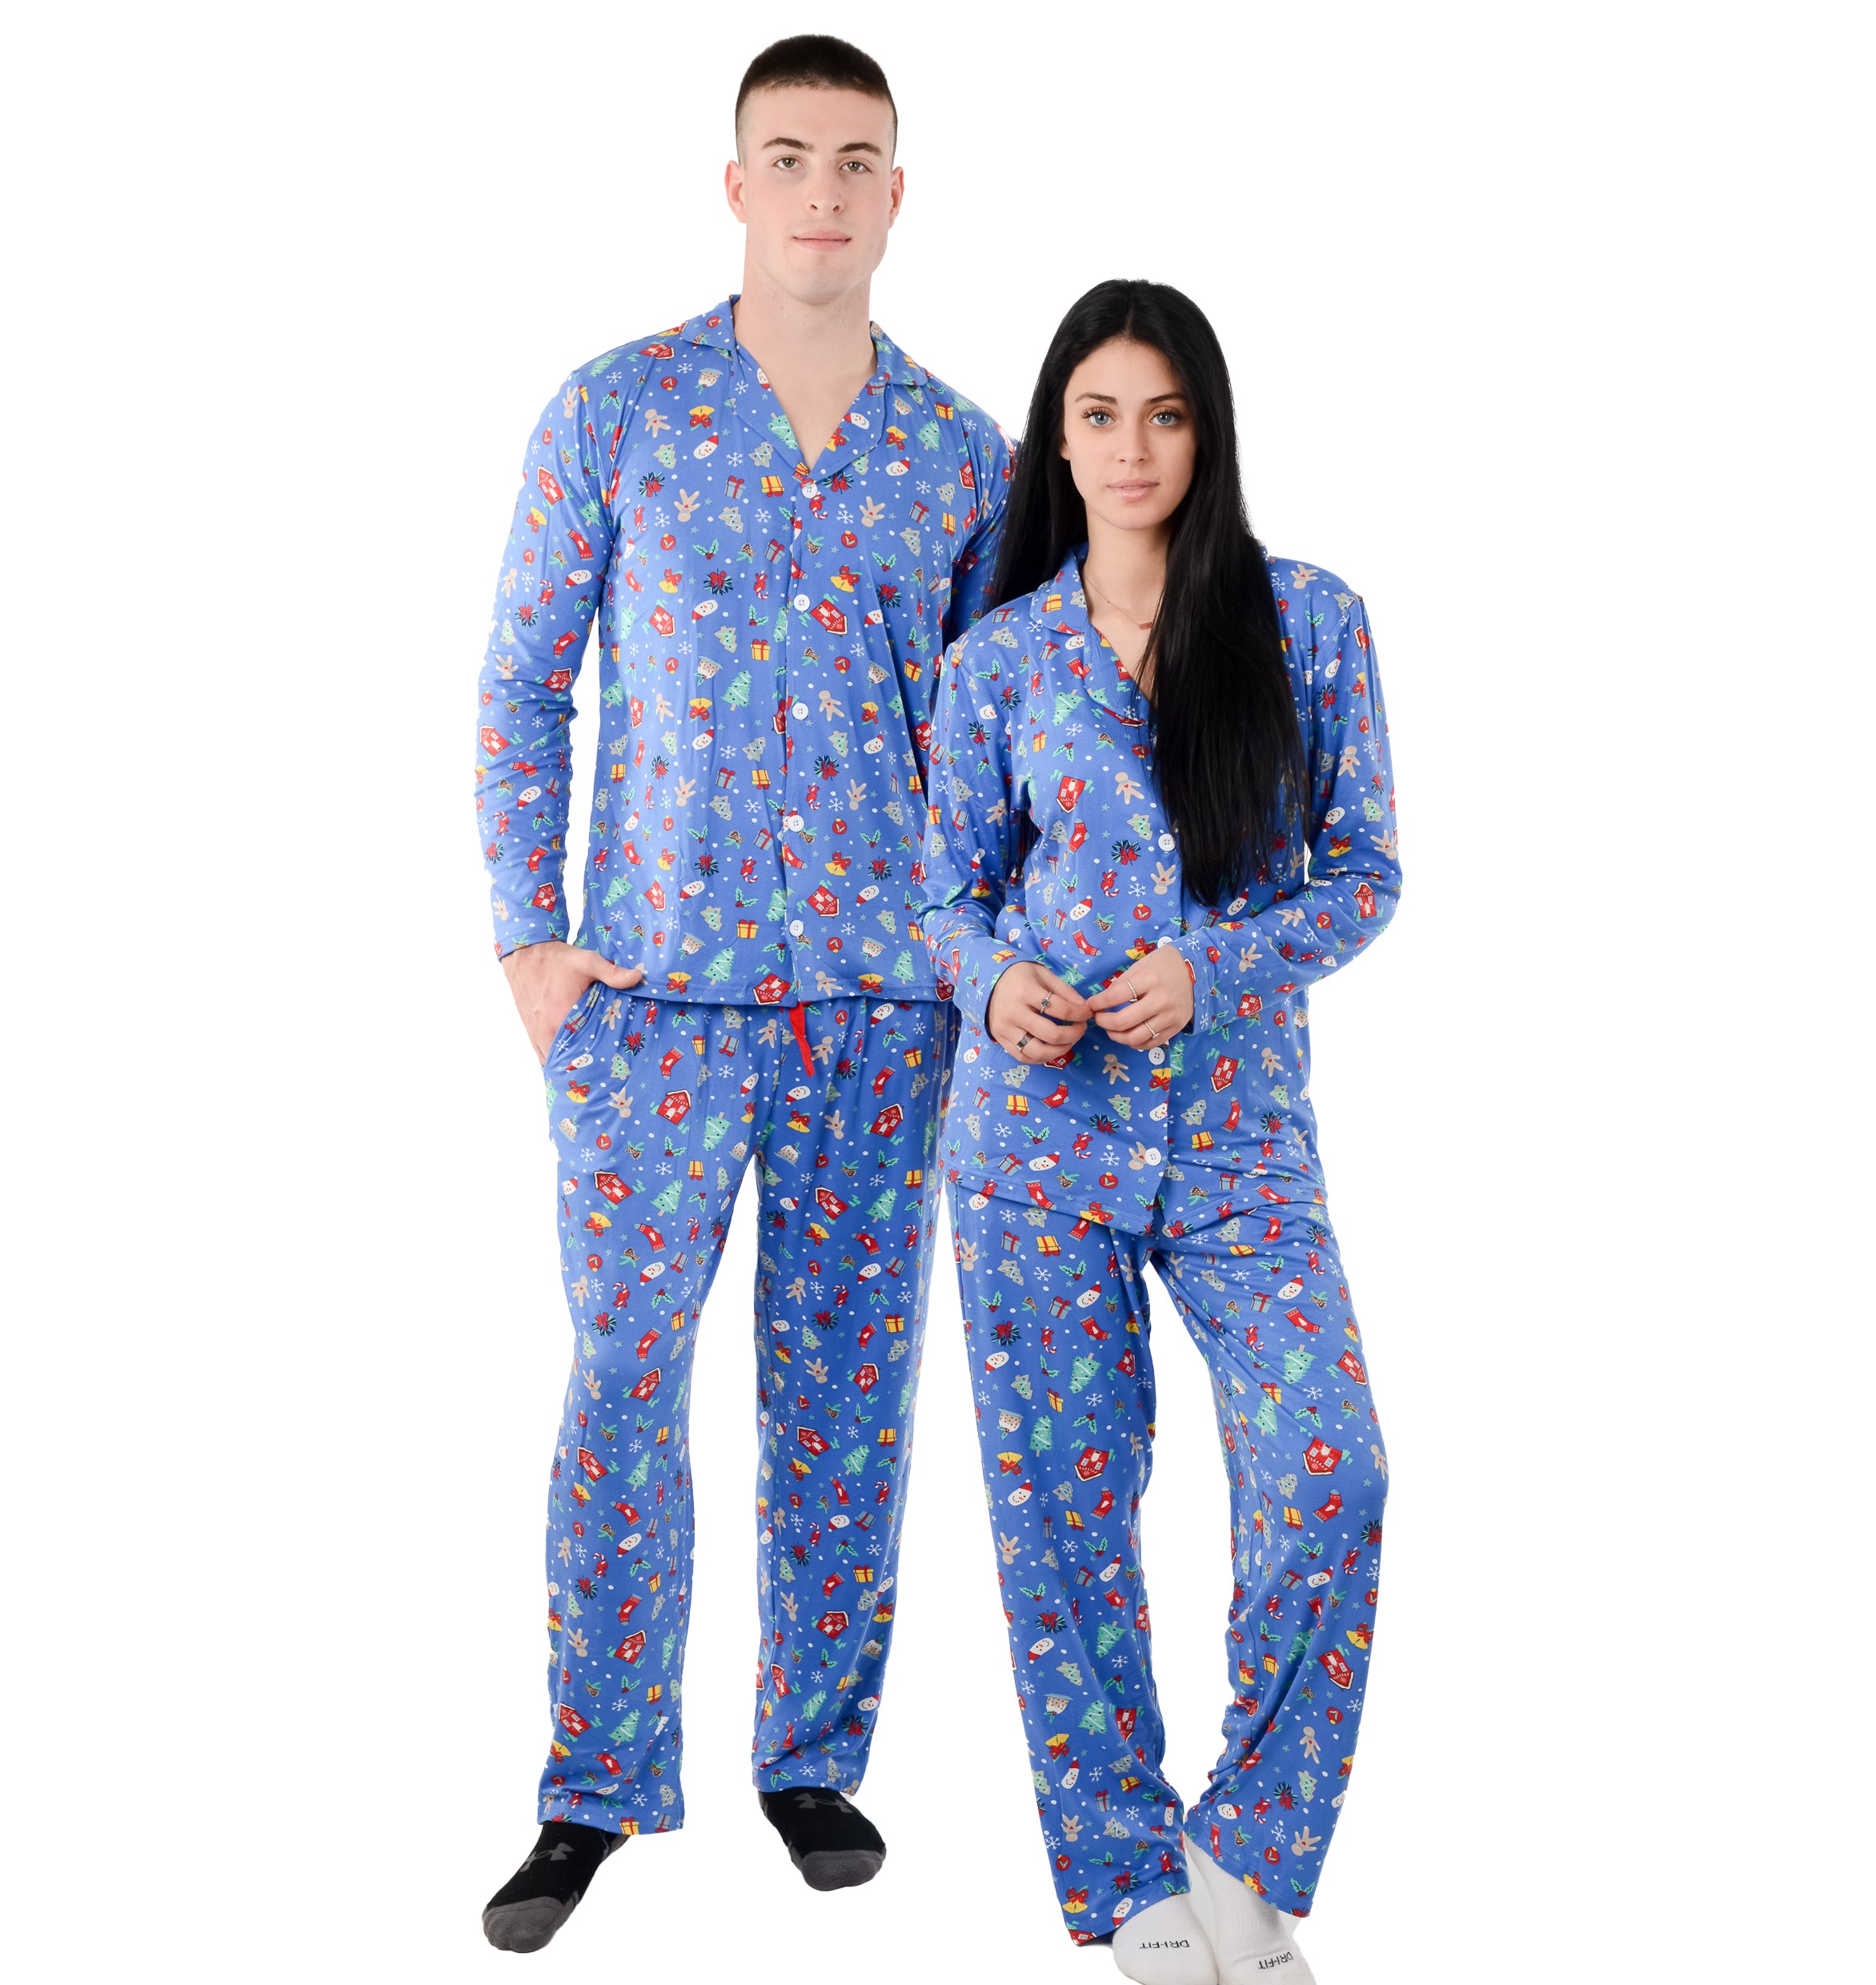 Believe Flannel Pj Set, Adult Christmas Pajamas, Couple's